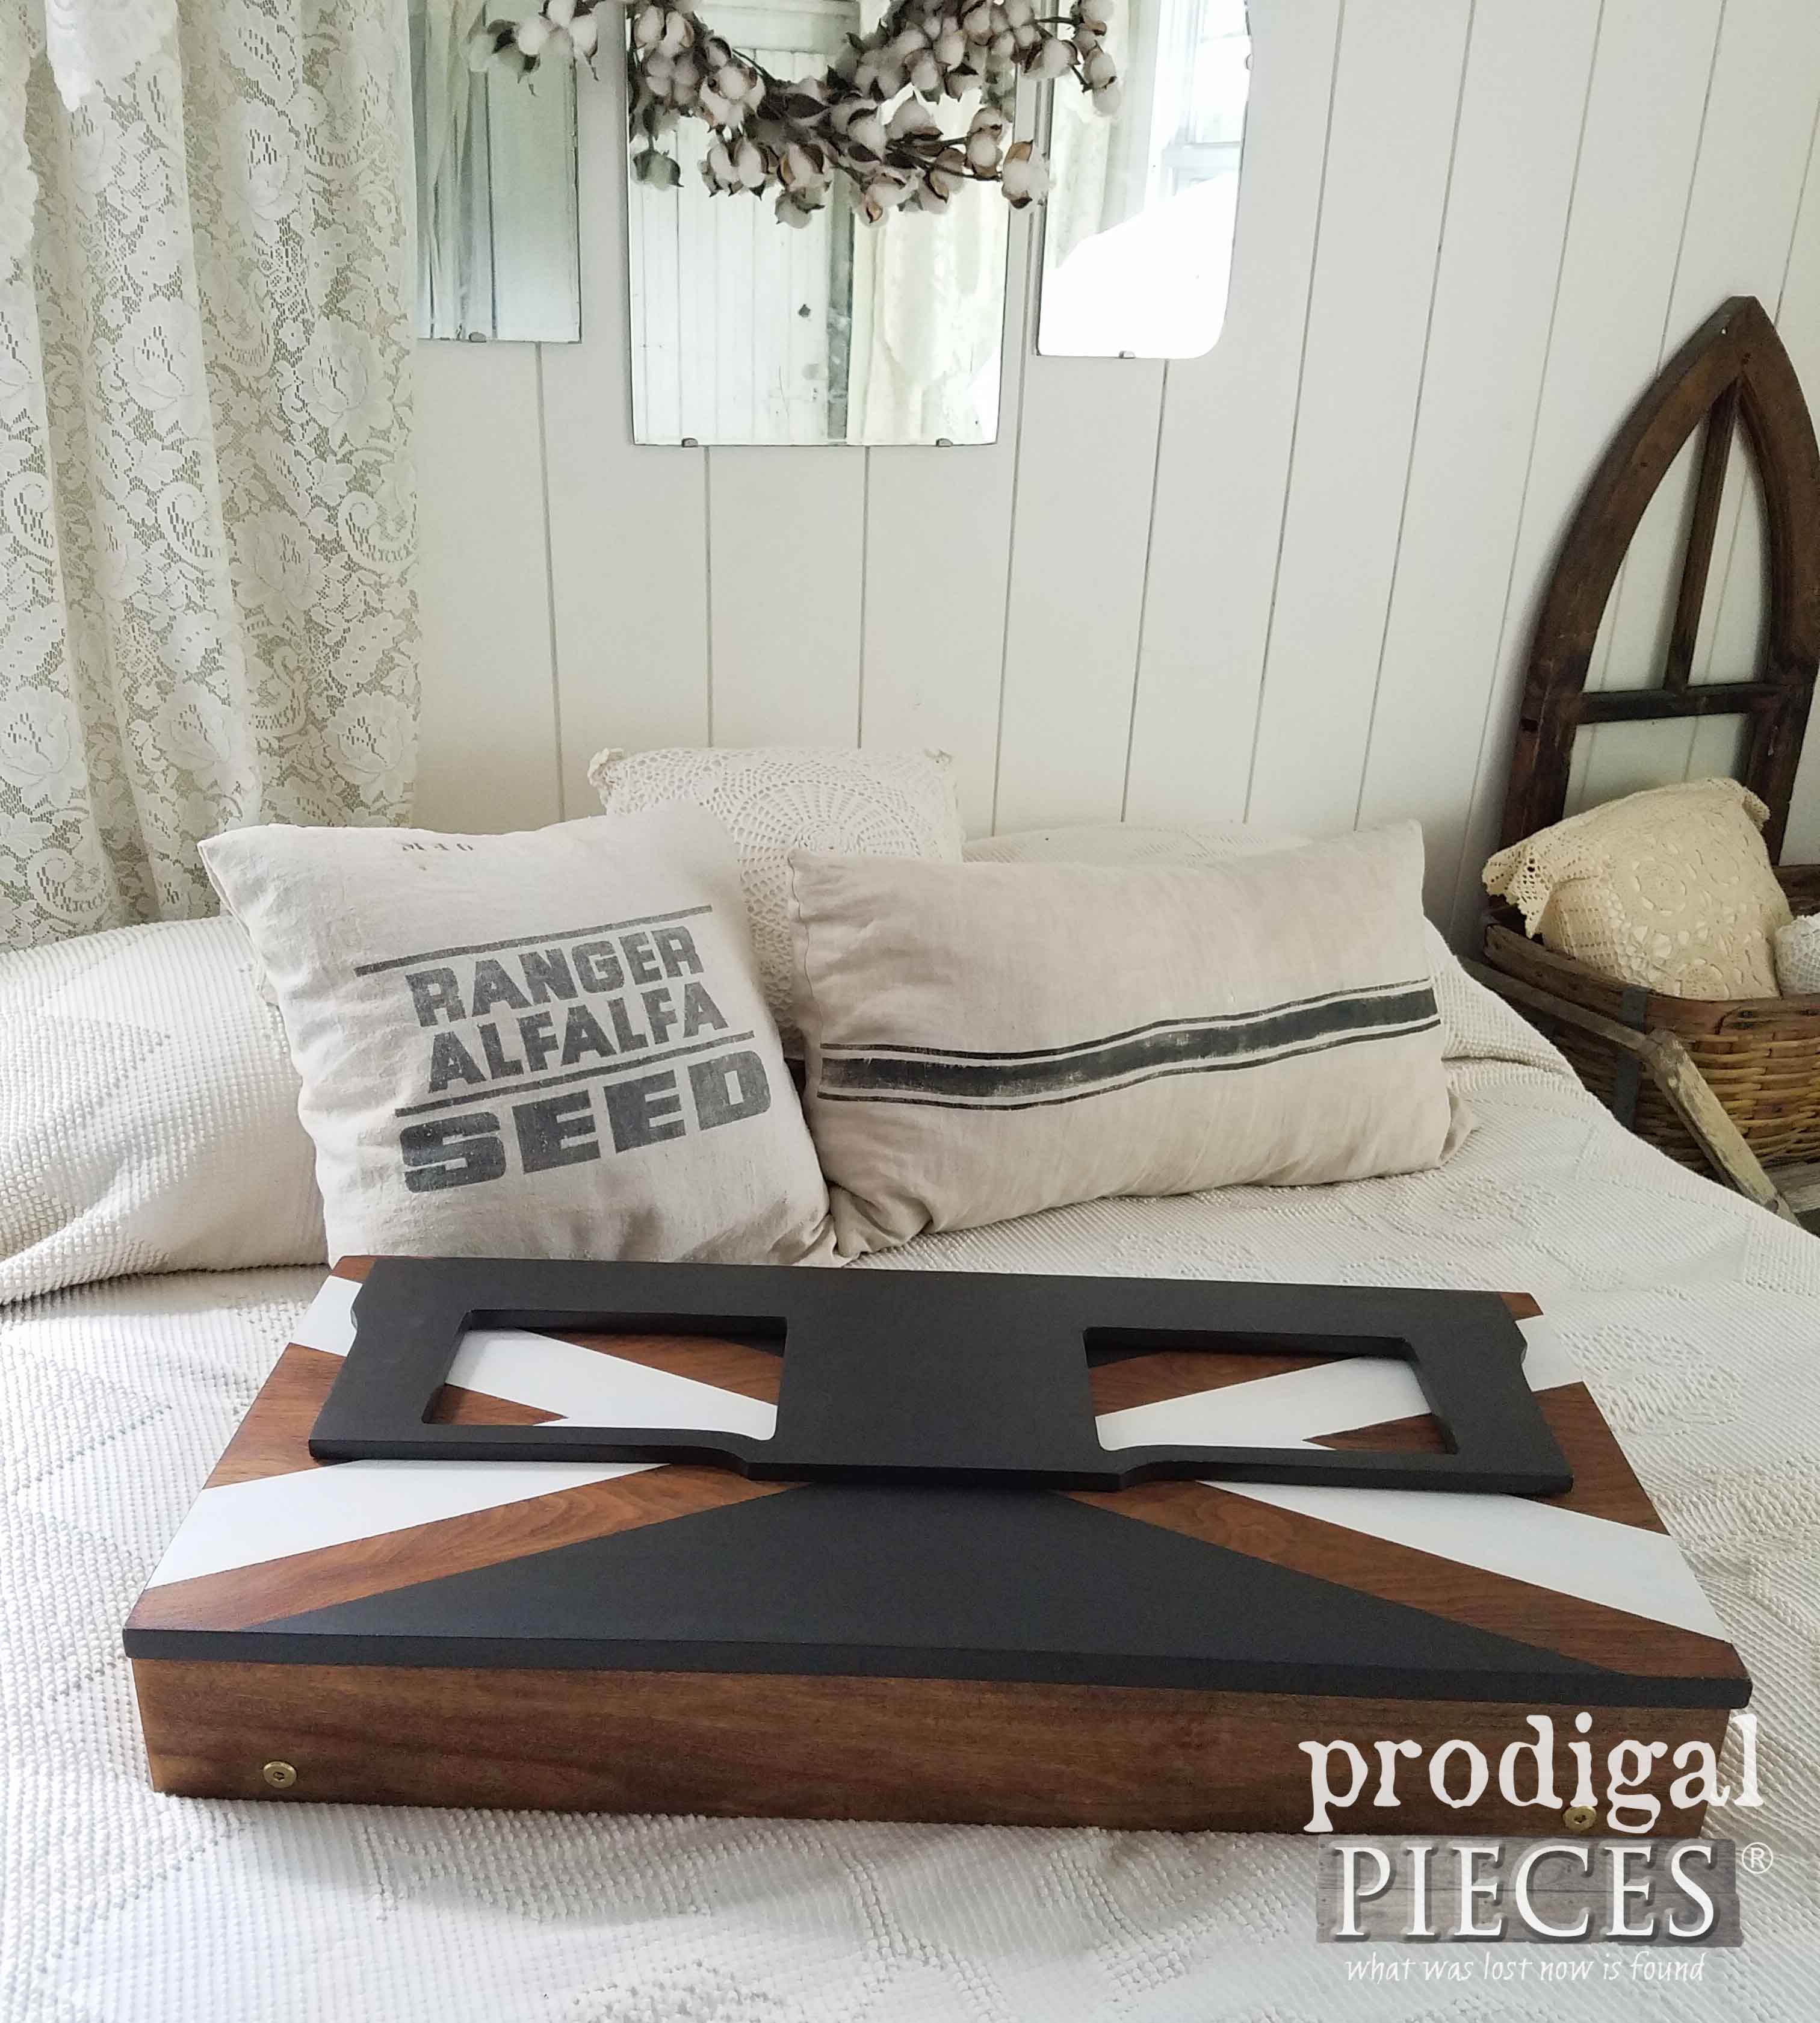 Folded Lap Desk Created by Prodigal Pieces | prodigalpieces.com